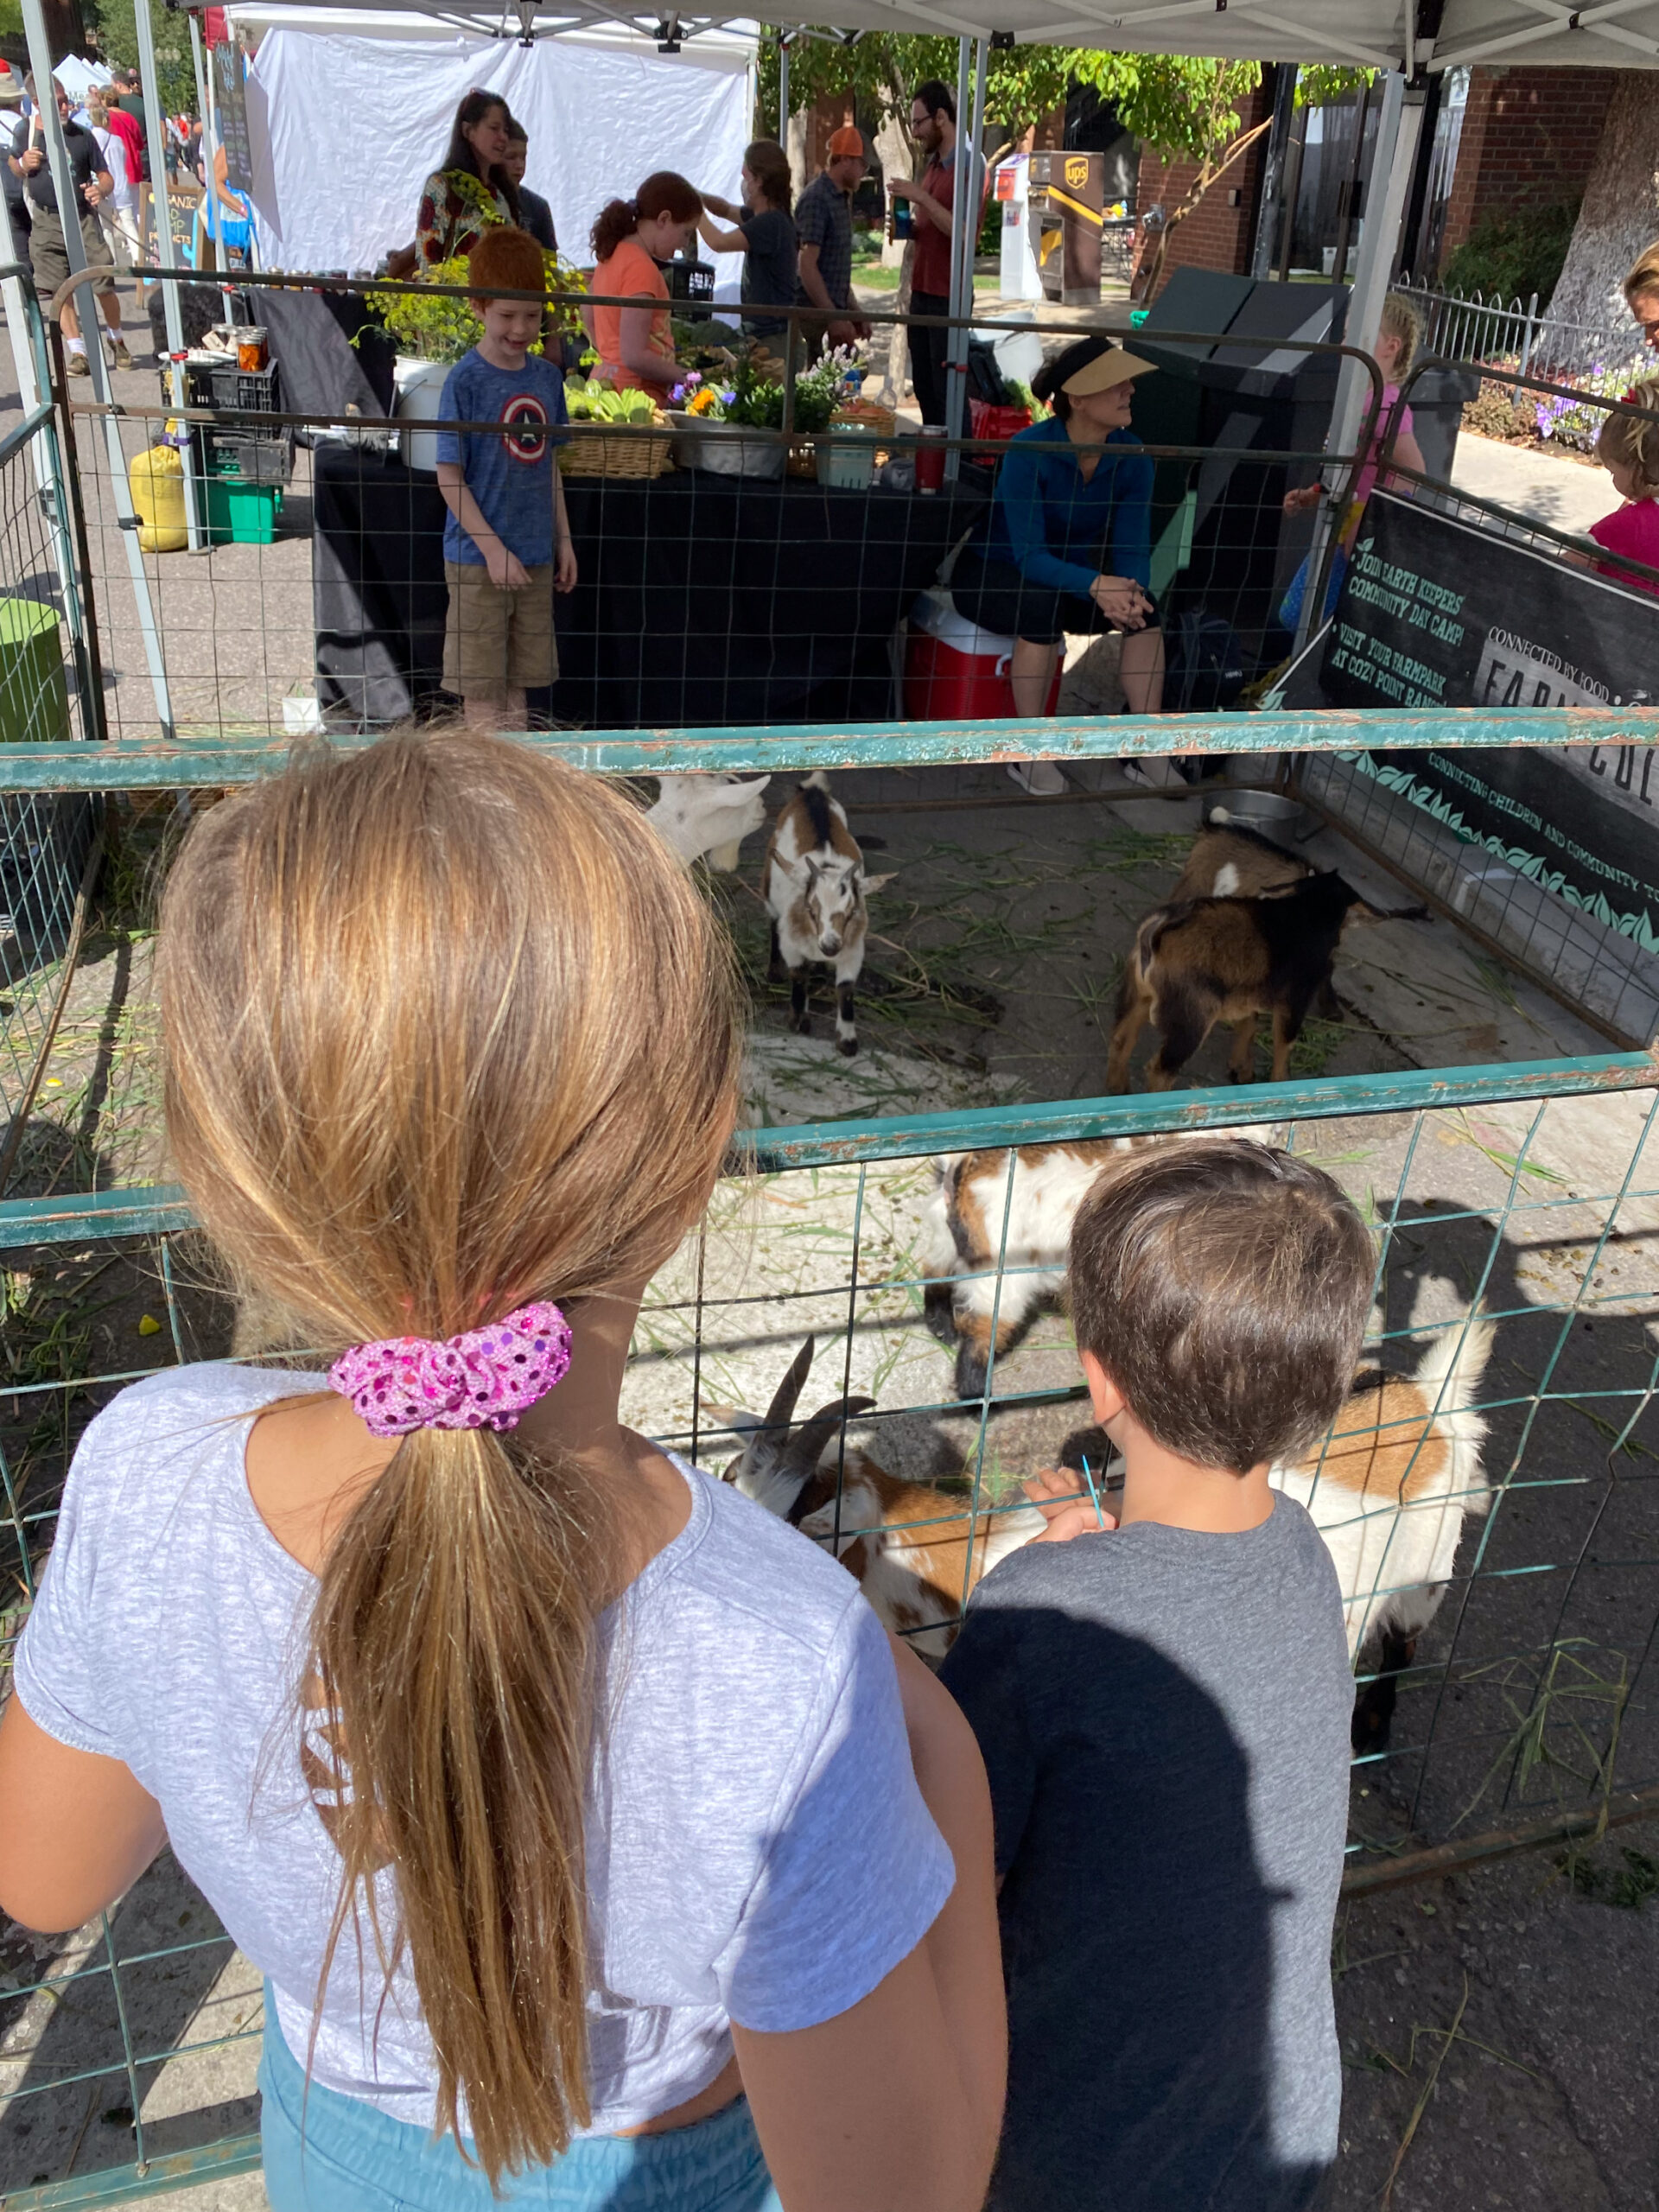 the kids love the little petting area with local baby farm animals at the Aspen Farmers' Market #aspenfarmersmarket #summerinaspen #visitcolorado 